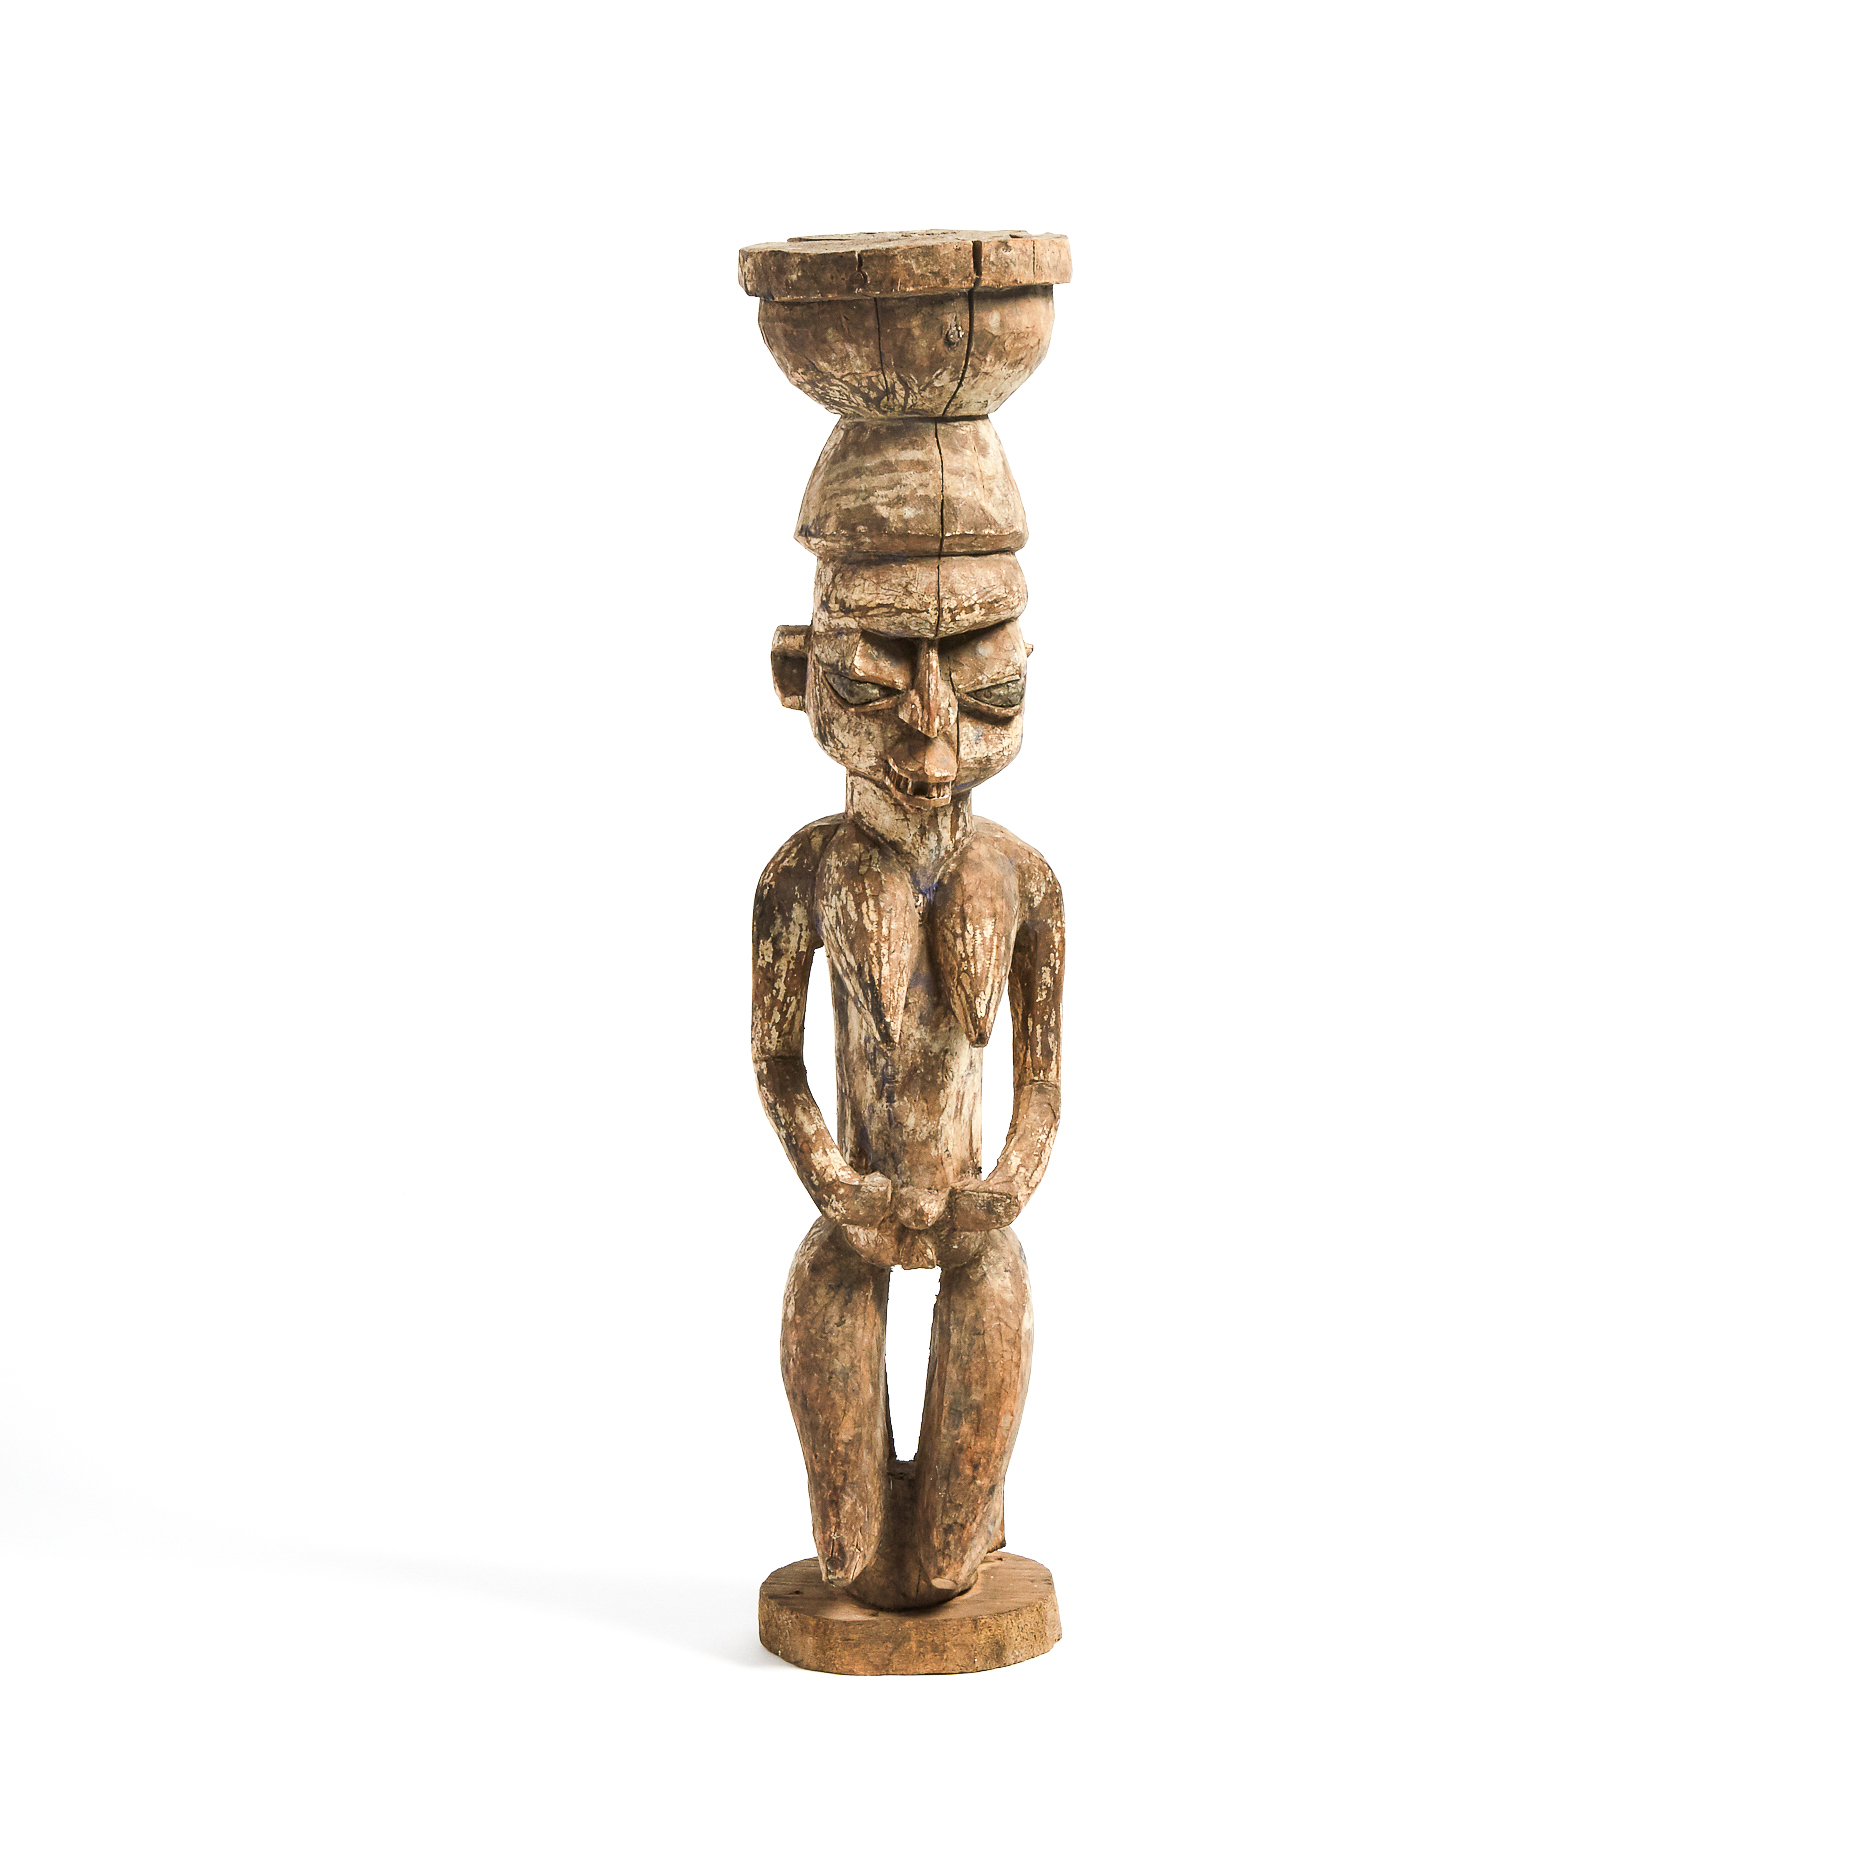 Yoruba Kneeling Female Figure, Nigeria, West Africa, early to mid 20th century